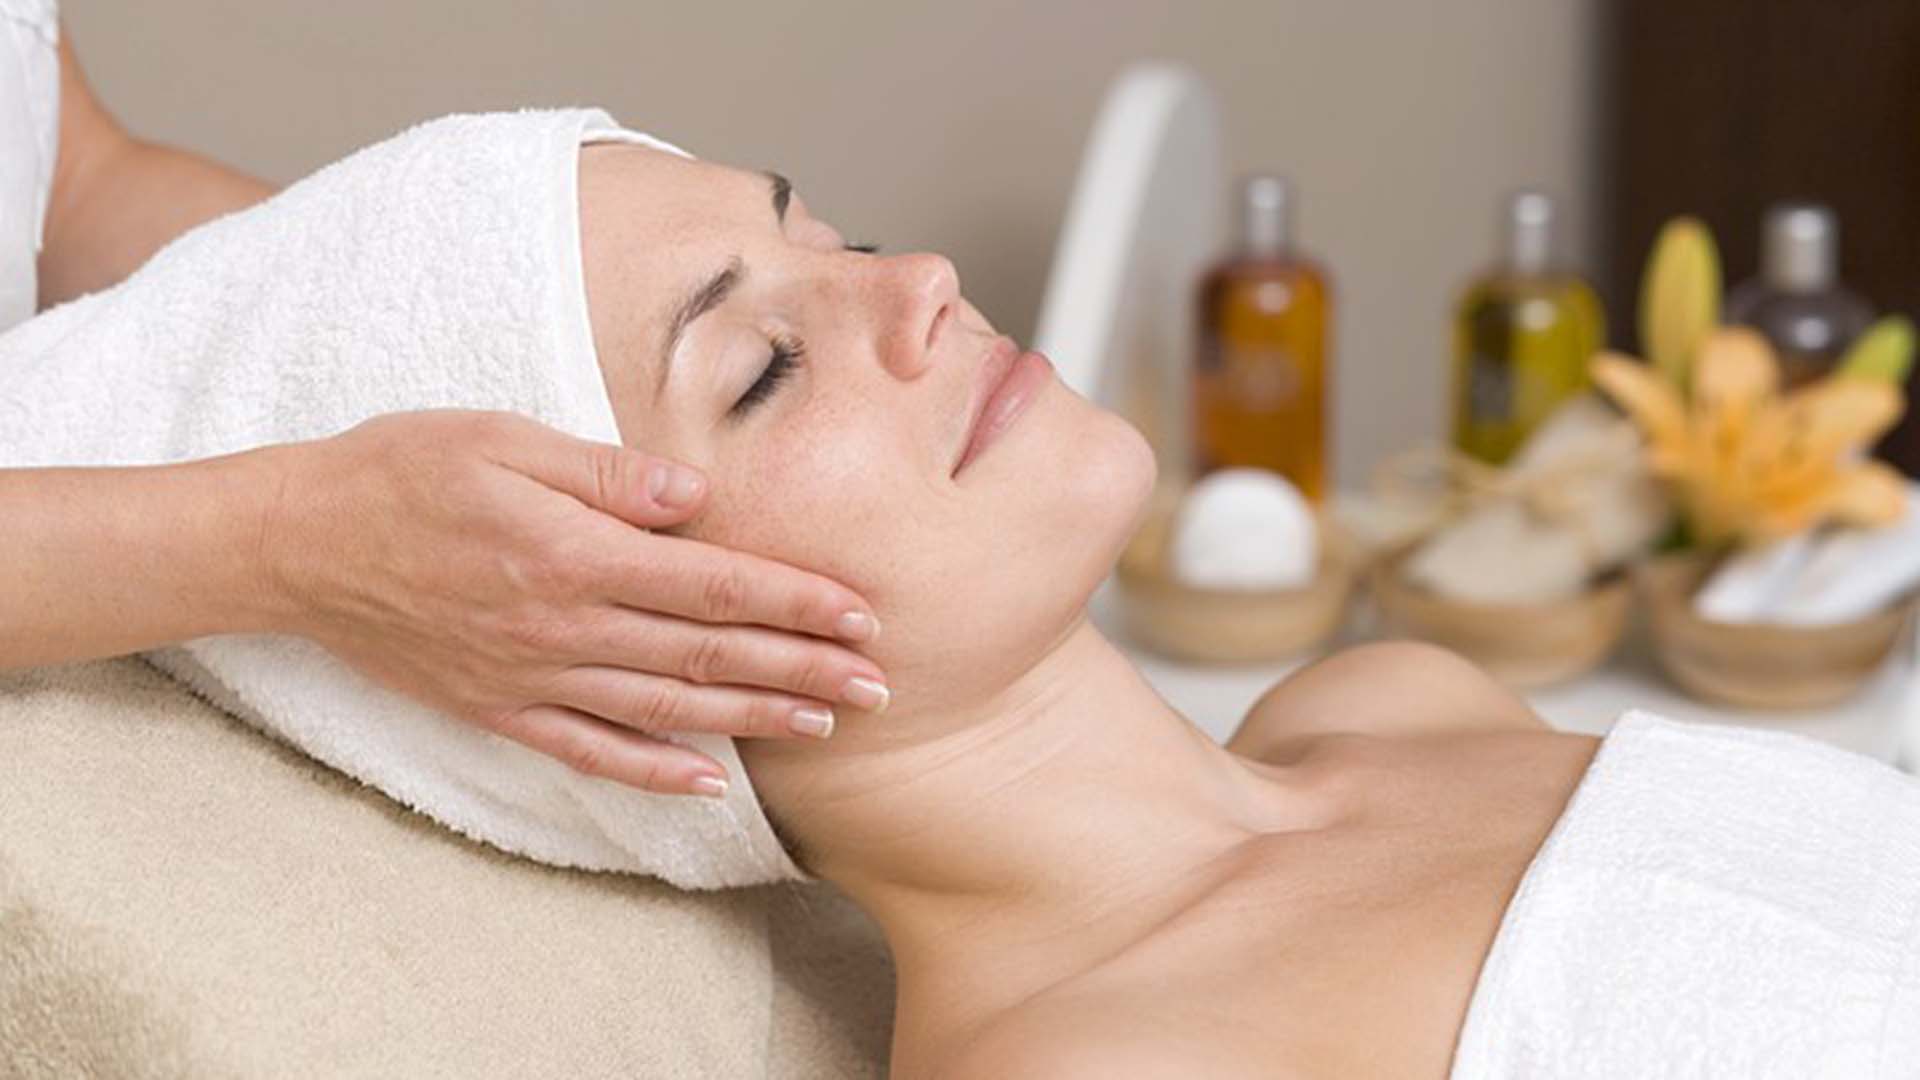 Woman having beauty treatment (face massage)